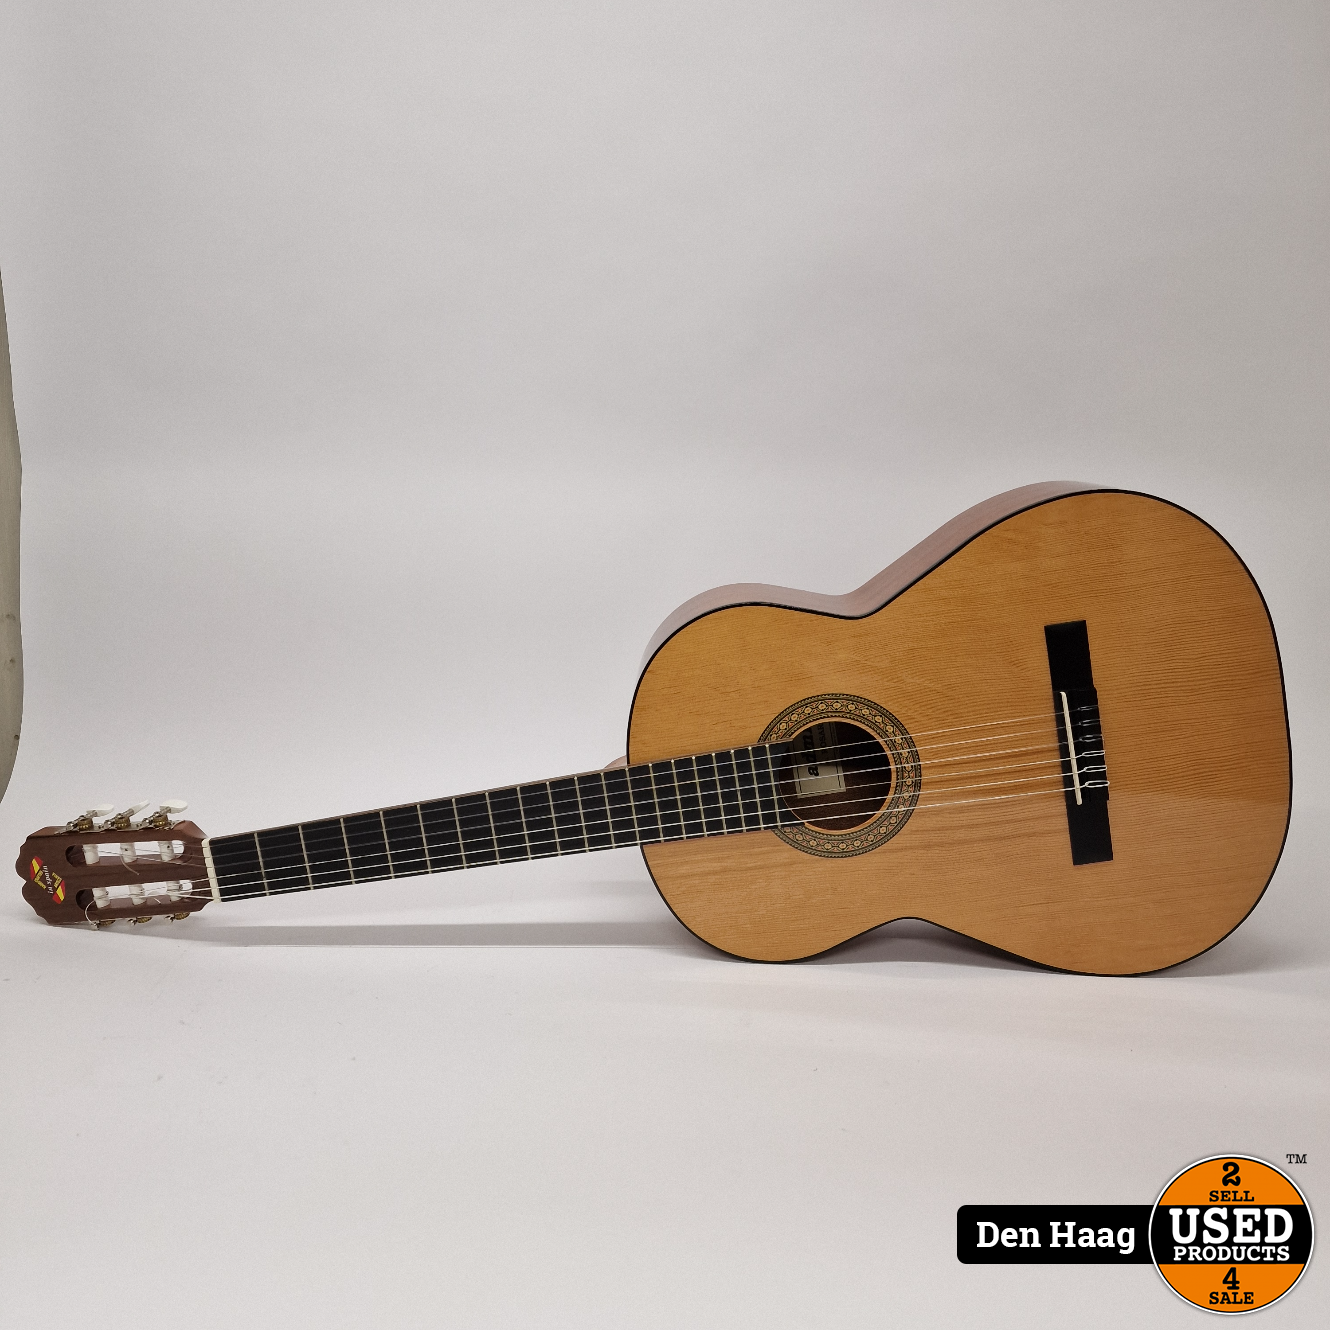 Rosario klassieke gitaar | Nette staat - Used Products Den Haag